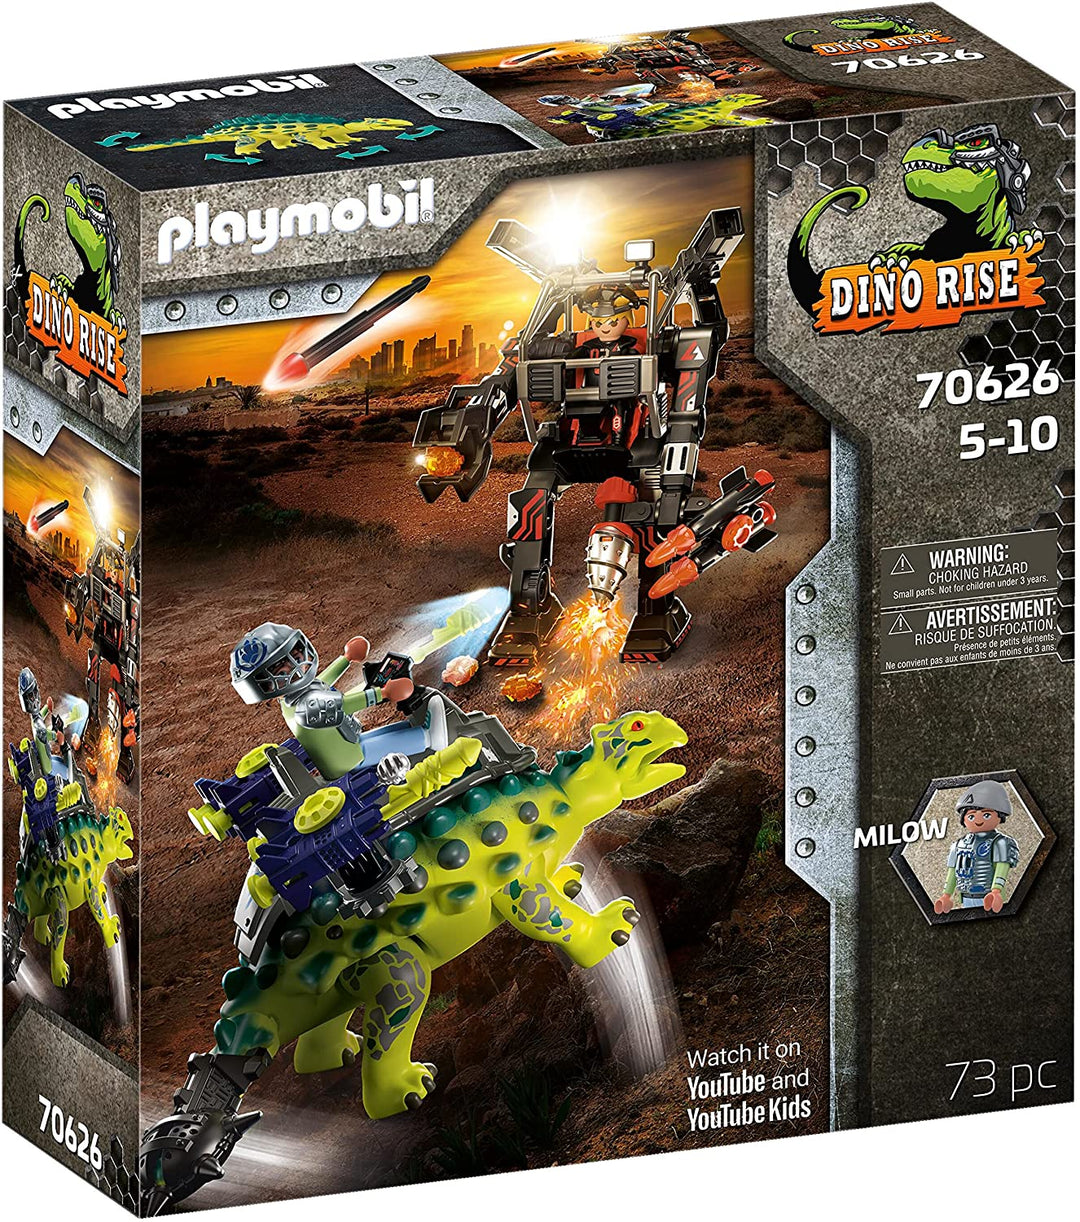 Playmobil 70626 Saichania, Invasion of The Robot Playset con dinosaurio blindado y Robot Fighter con cañones de disparo